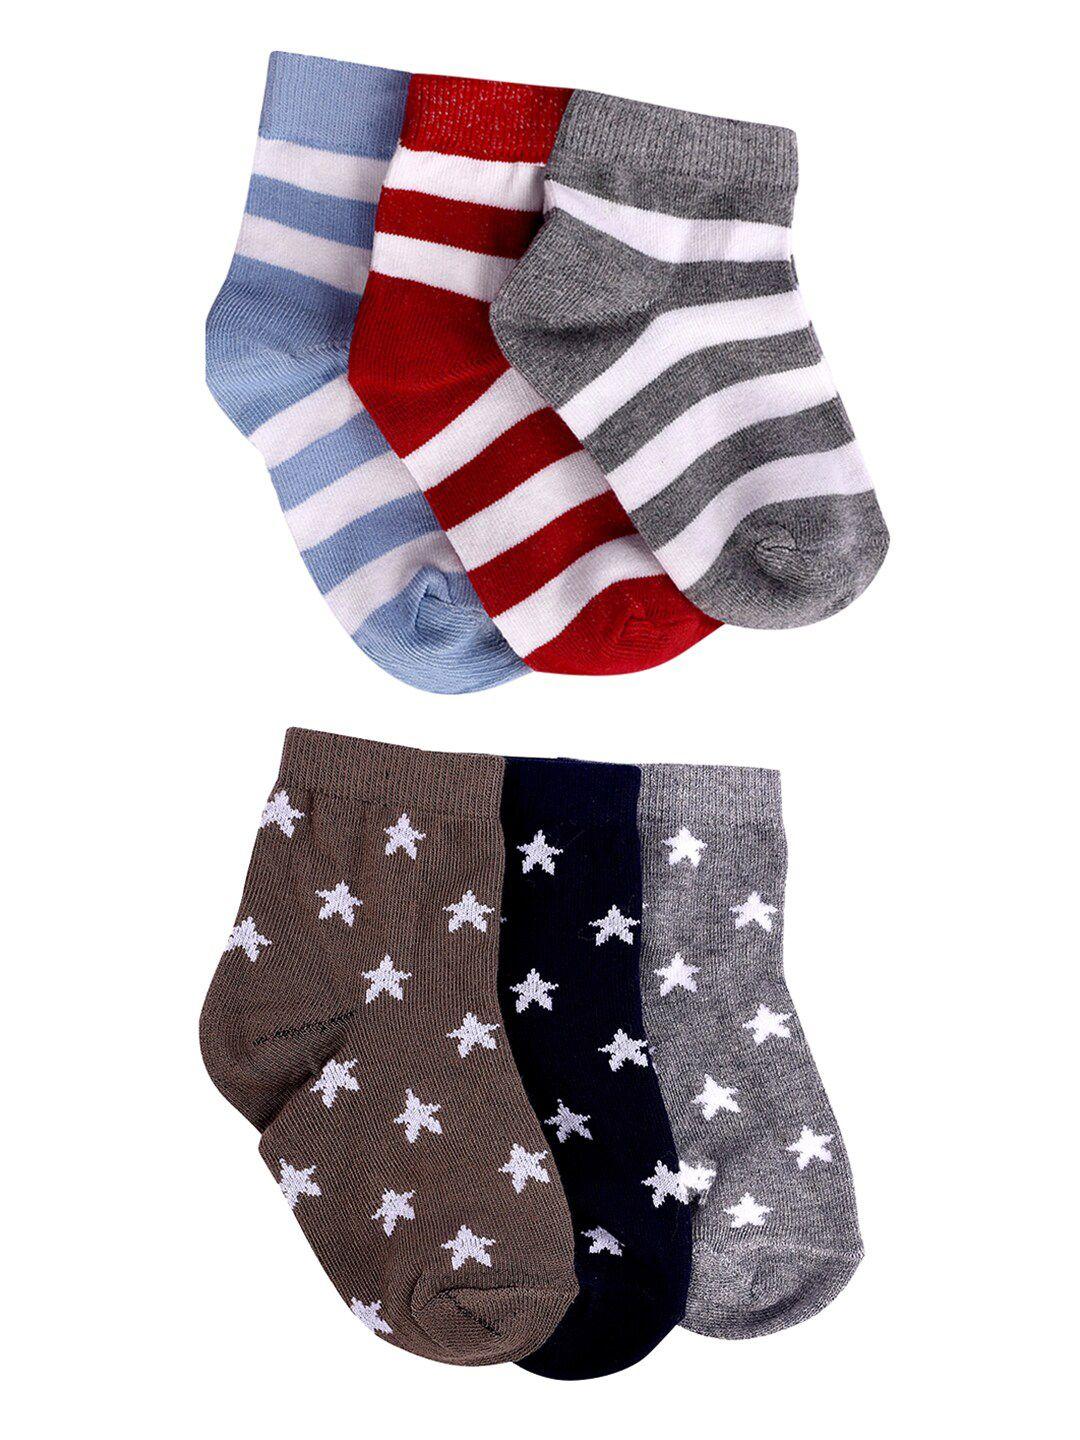 FOOTPRINTS Unisex Infants Grey & White Pack Of 6 Striped Socks